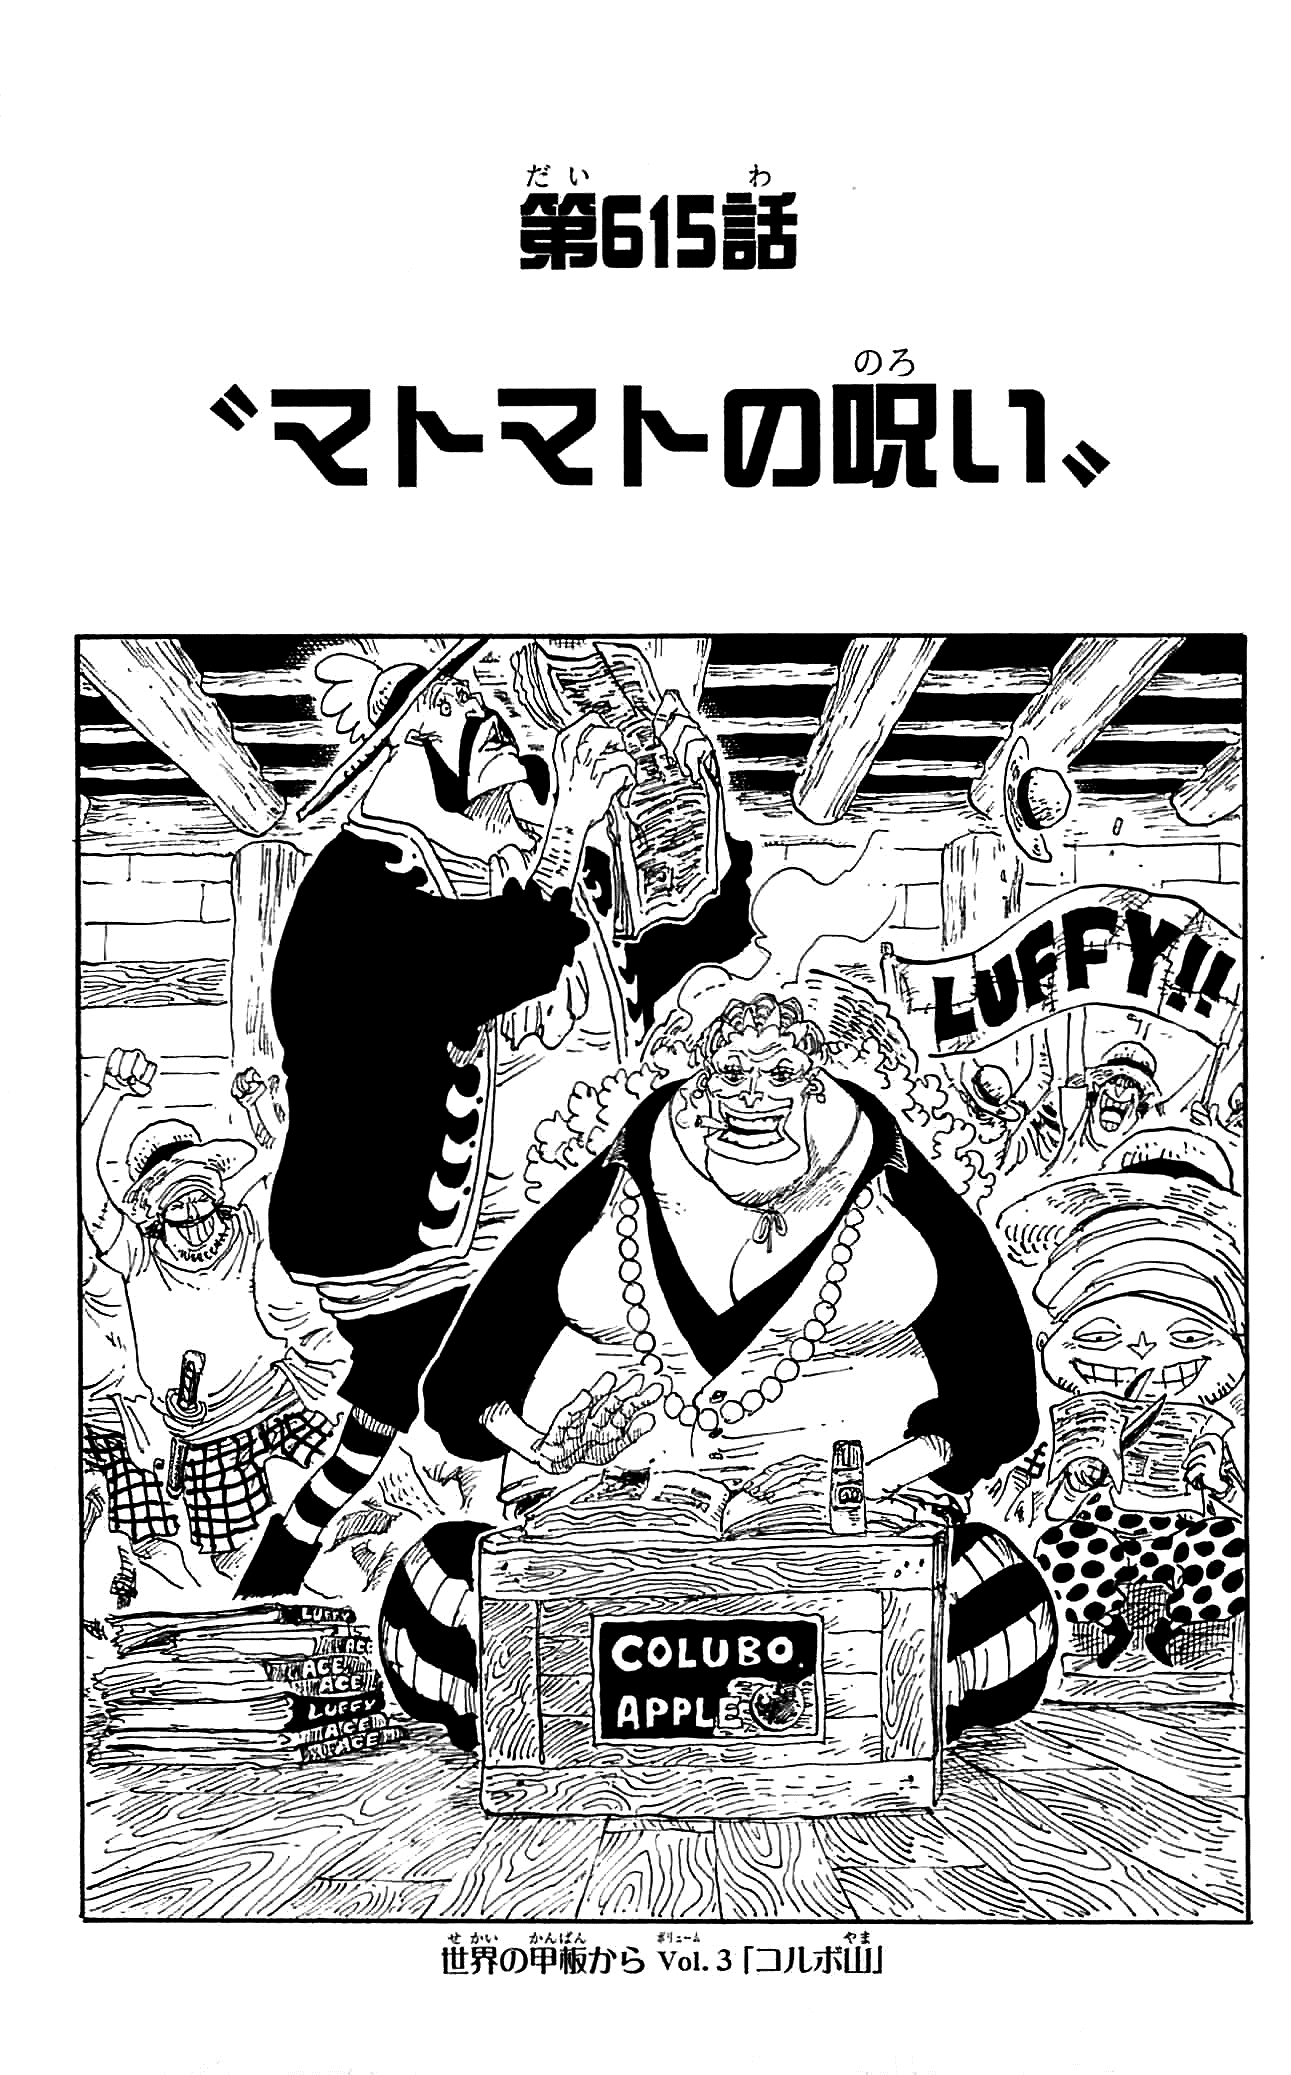 One Piece Manga Series  Barnes  Noble